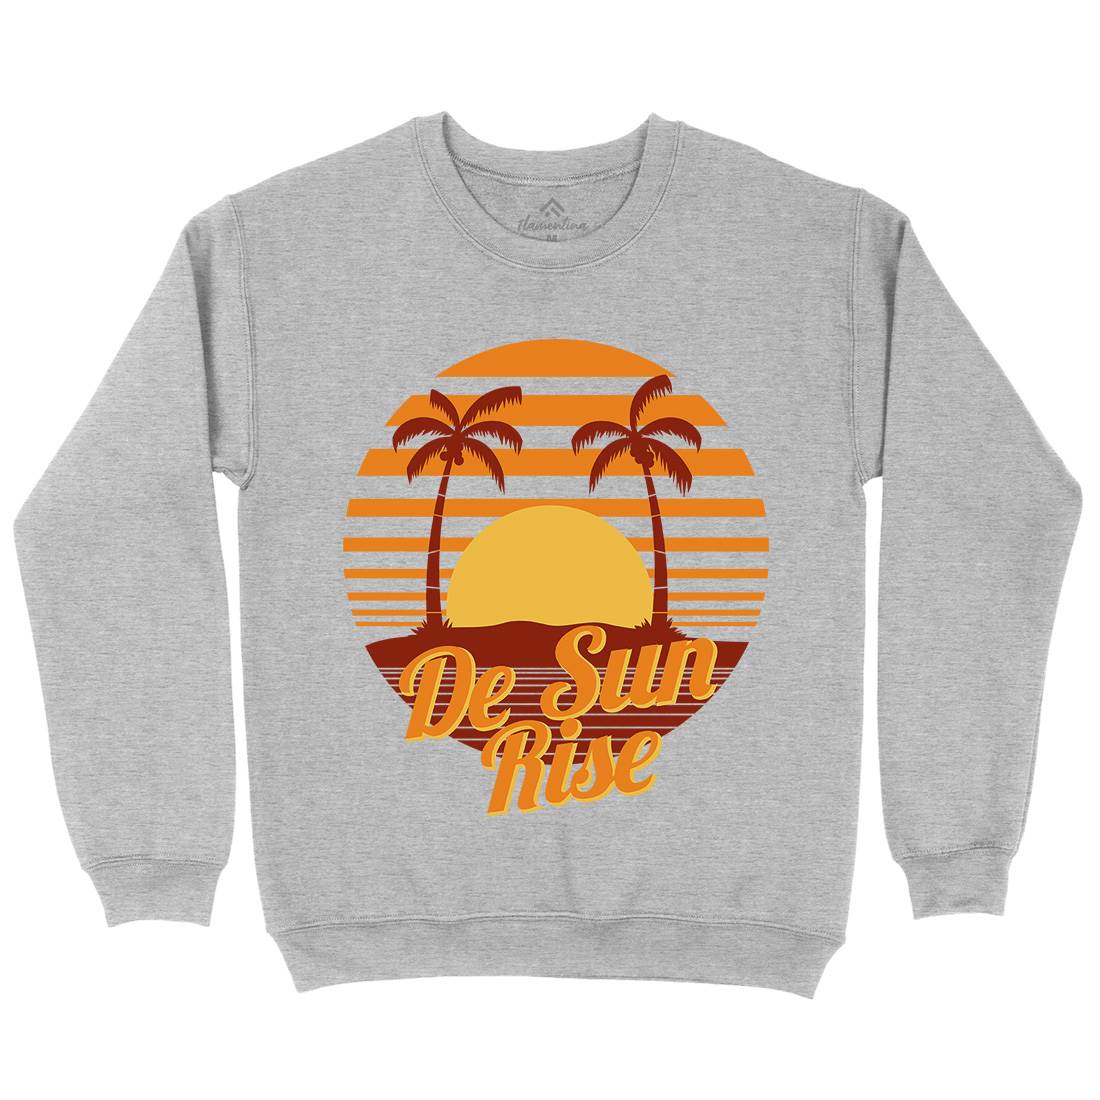 Sun Rise Kids Crew Neck Sweatshirt Holiday D752